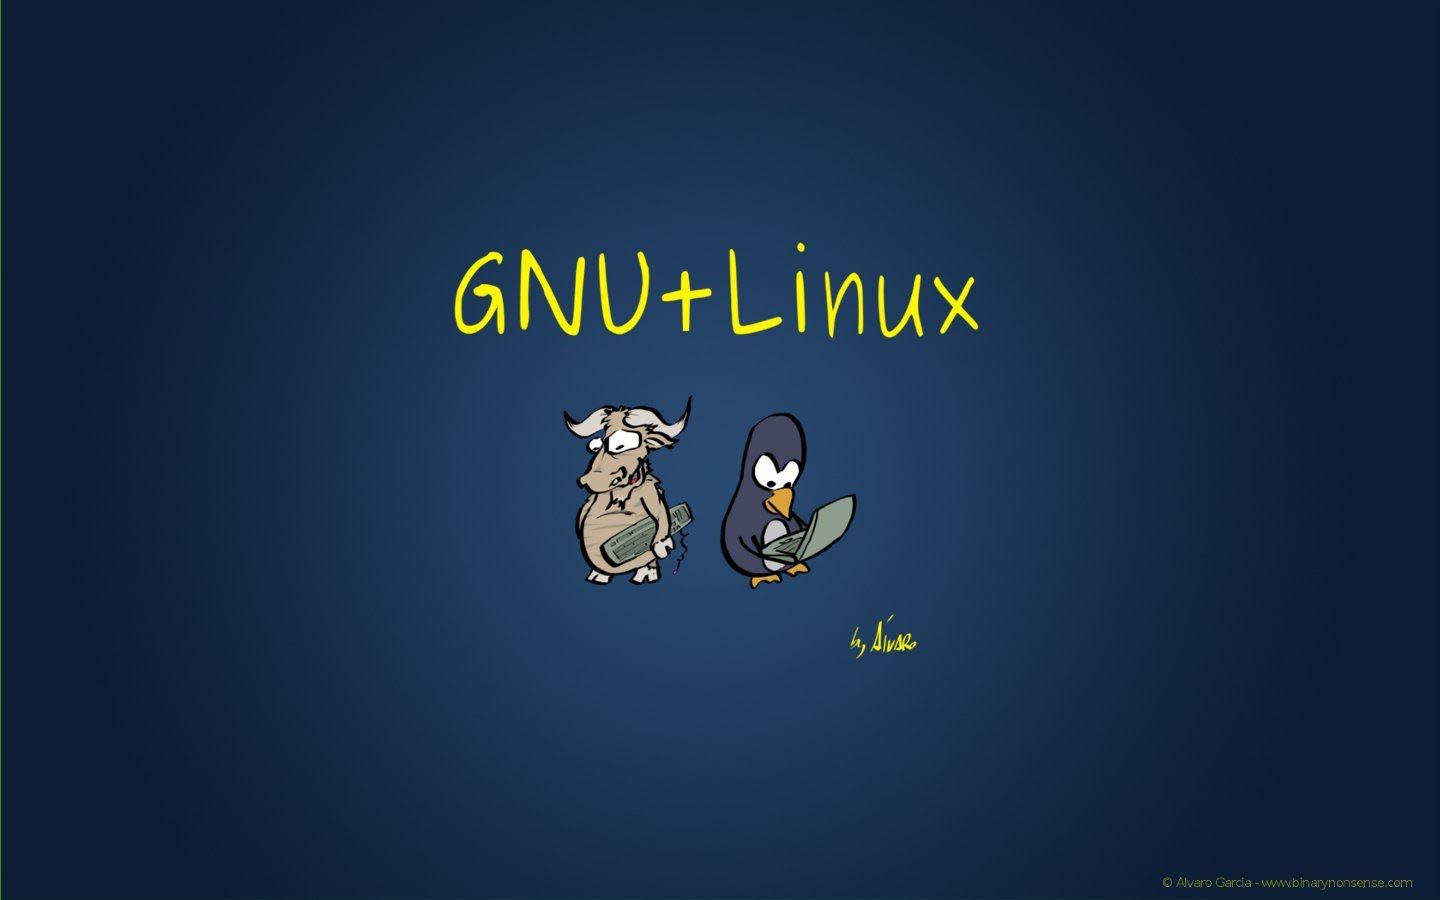 1280x1024px Gnu Linux (223.33 KB).07.2015